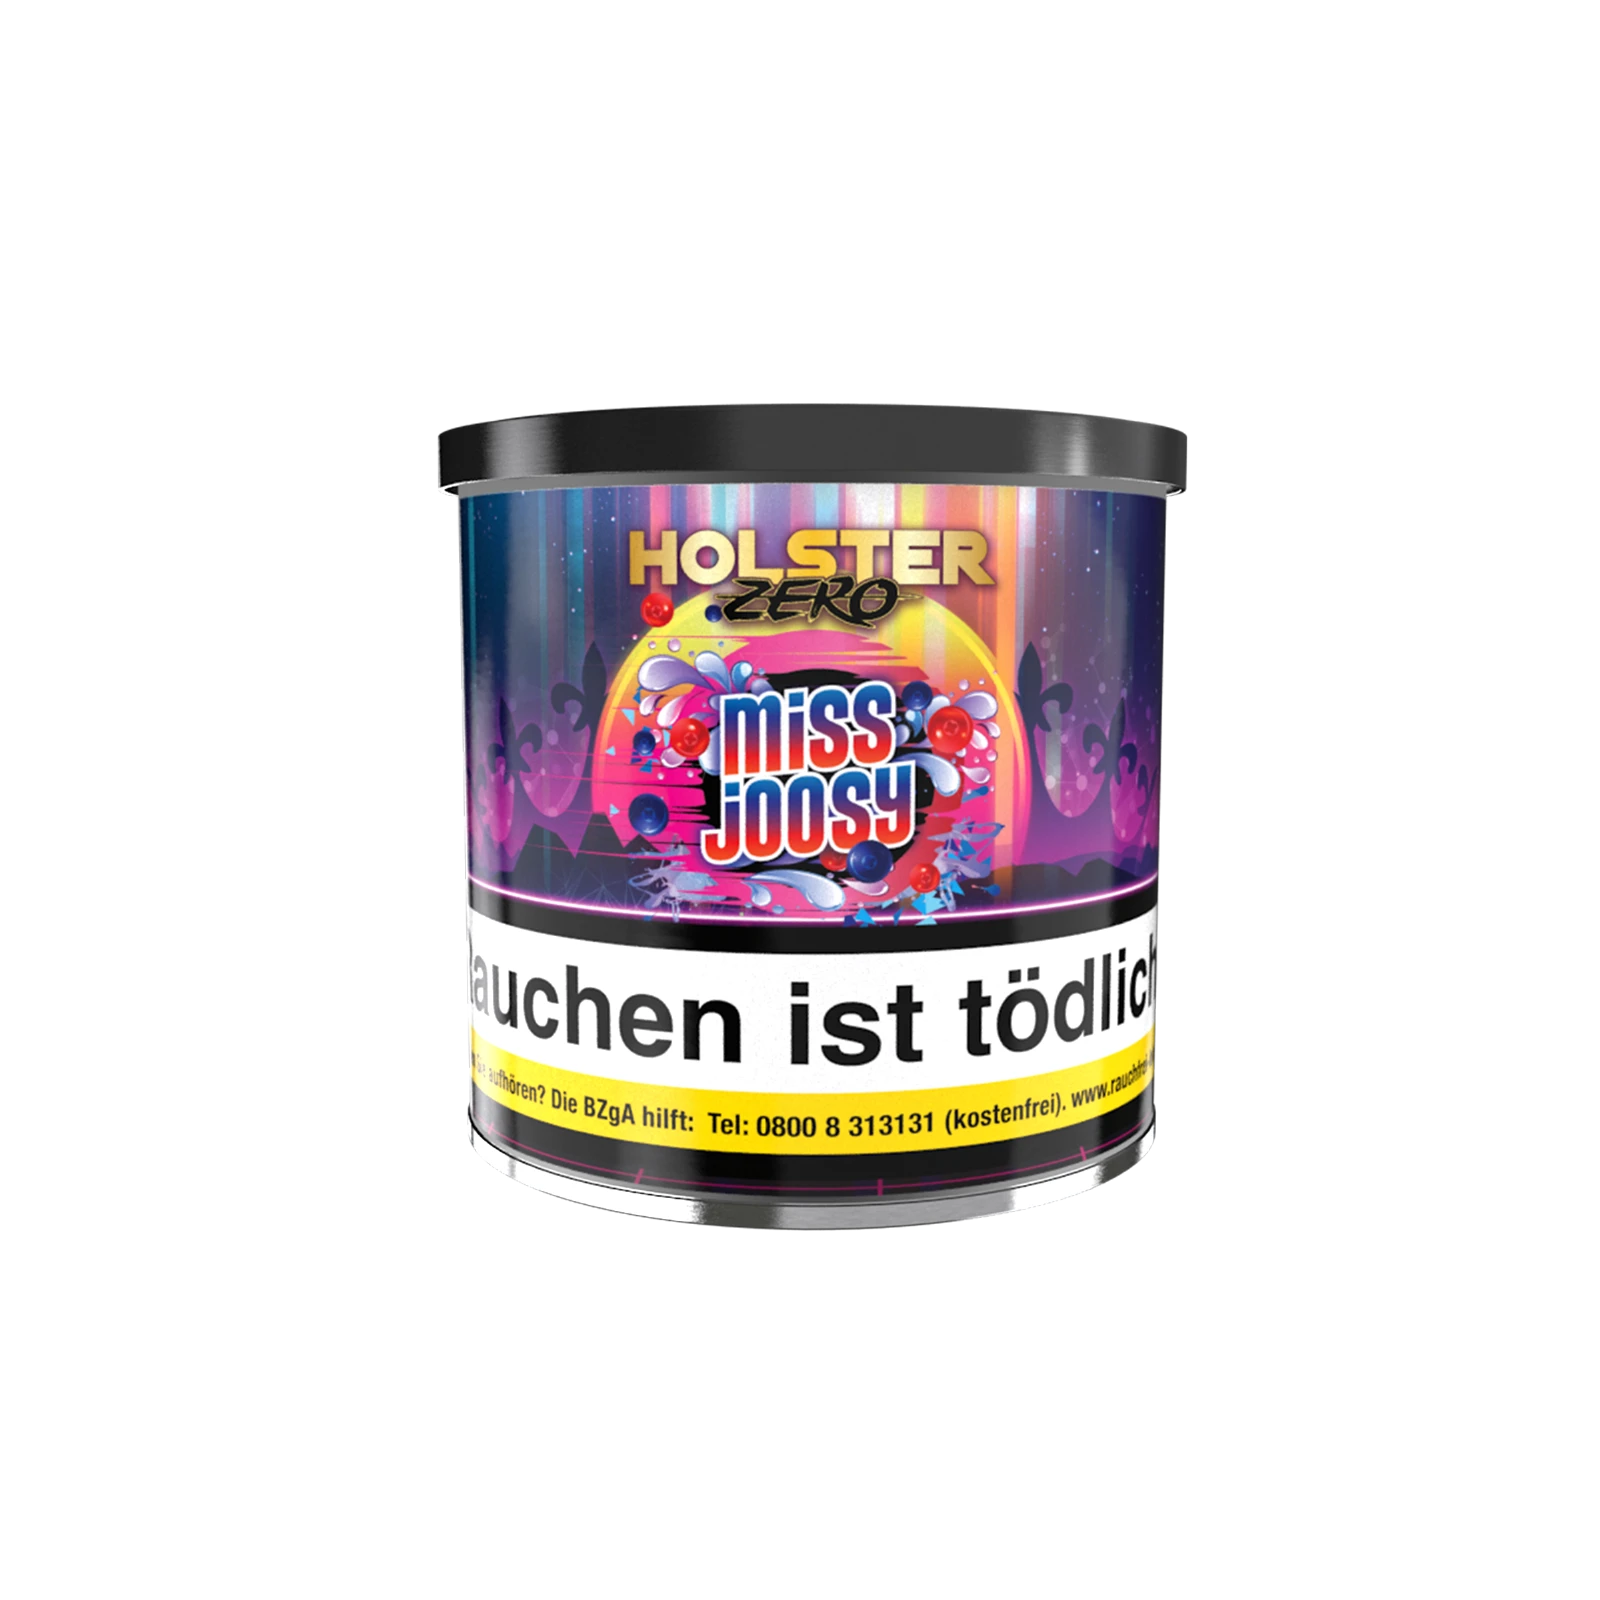 Holster ZERO Dry Base Miss Joosy 75g | Pfeifentabak günstig kaufen